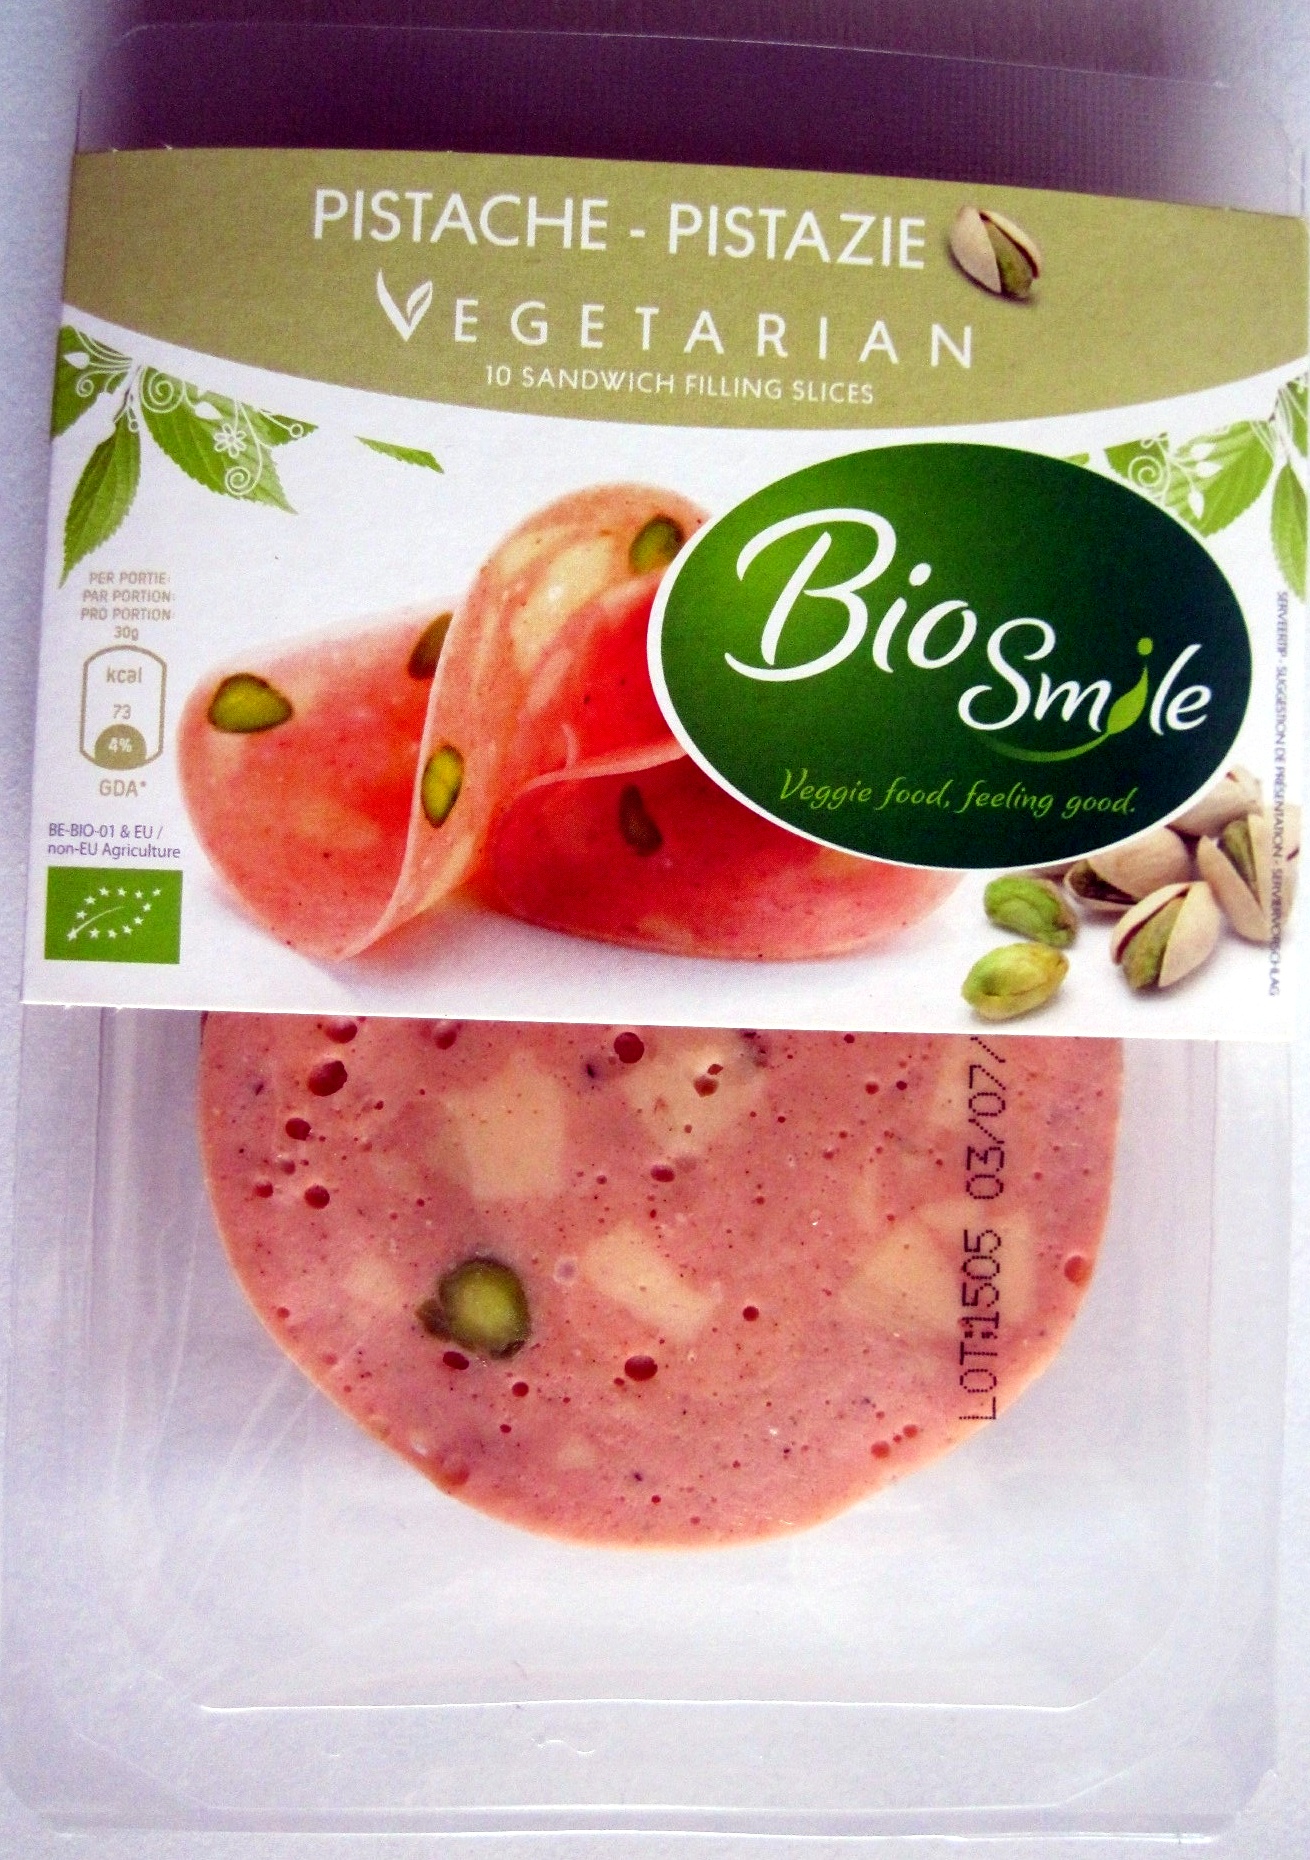 Pistache Vegetarian - Product - fr